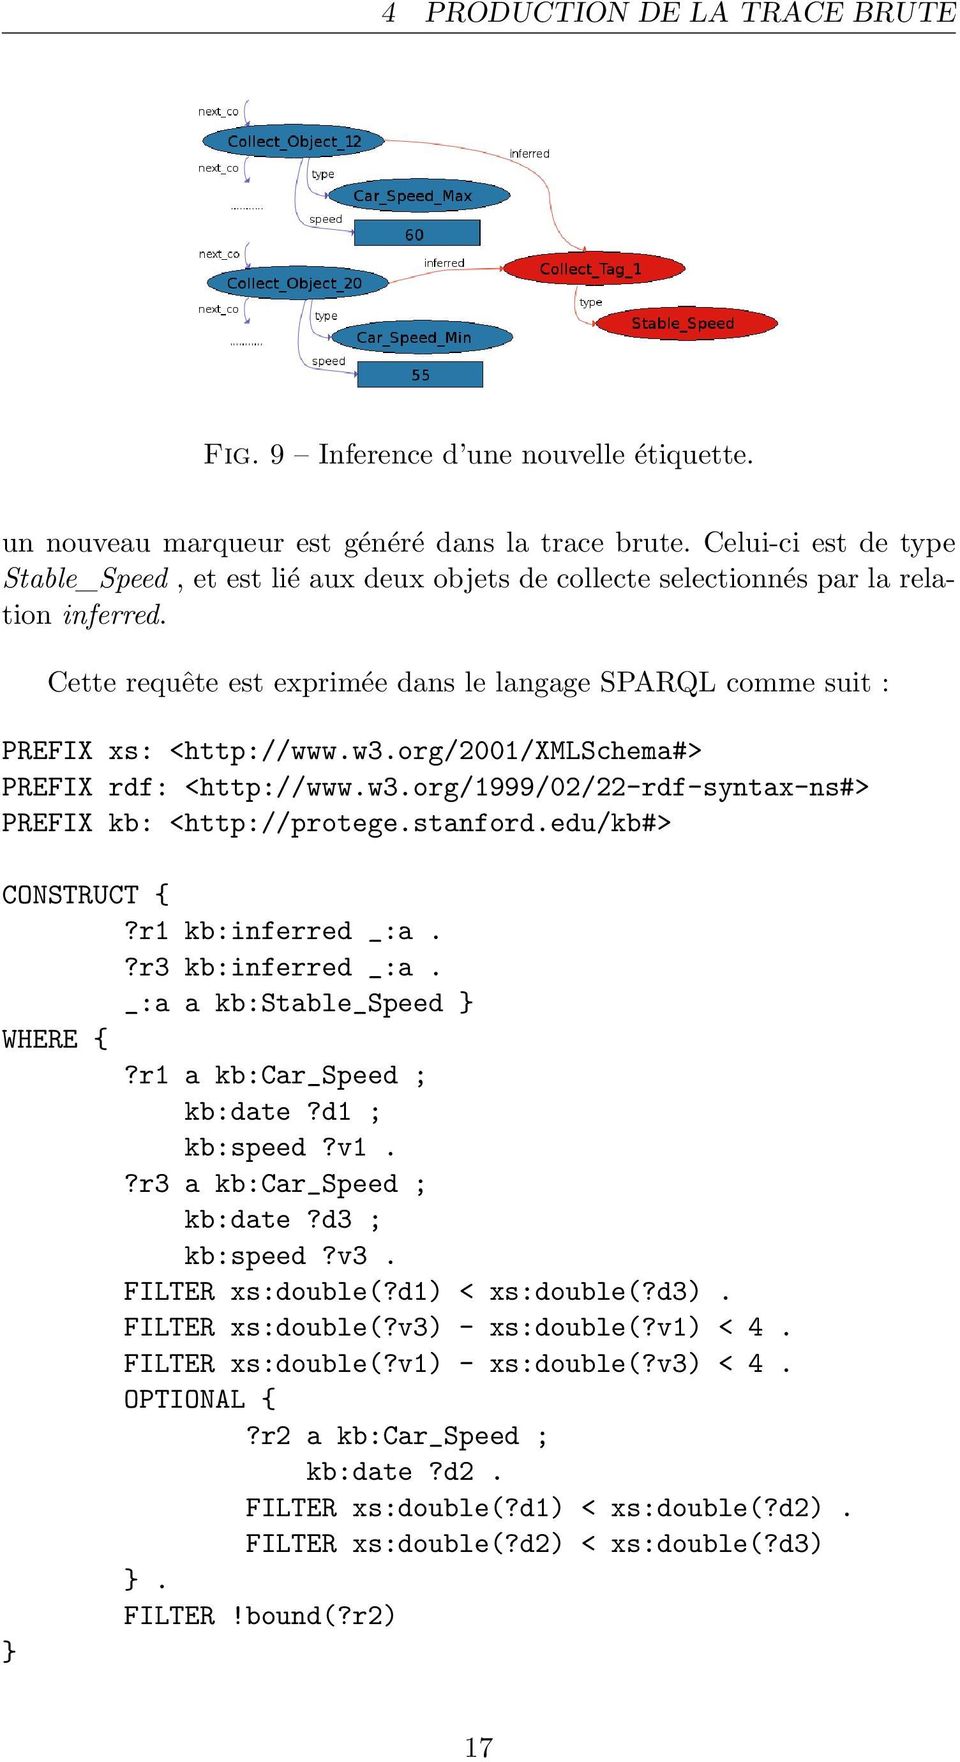 w3.org/2001/xmlschema#> PREFIX rdf: <http://www.w3.org/1999/02/22-rdf-syntax-ns#> PREFIX kb: <http://protege.stanford.edu/kb#> CONSTRUCT {?r1 kb:inferred _:a.?r3 kb:inferred _:a.